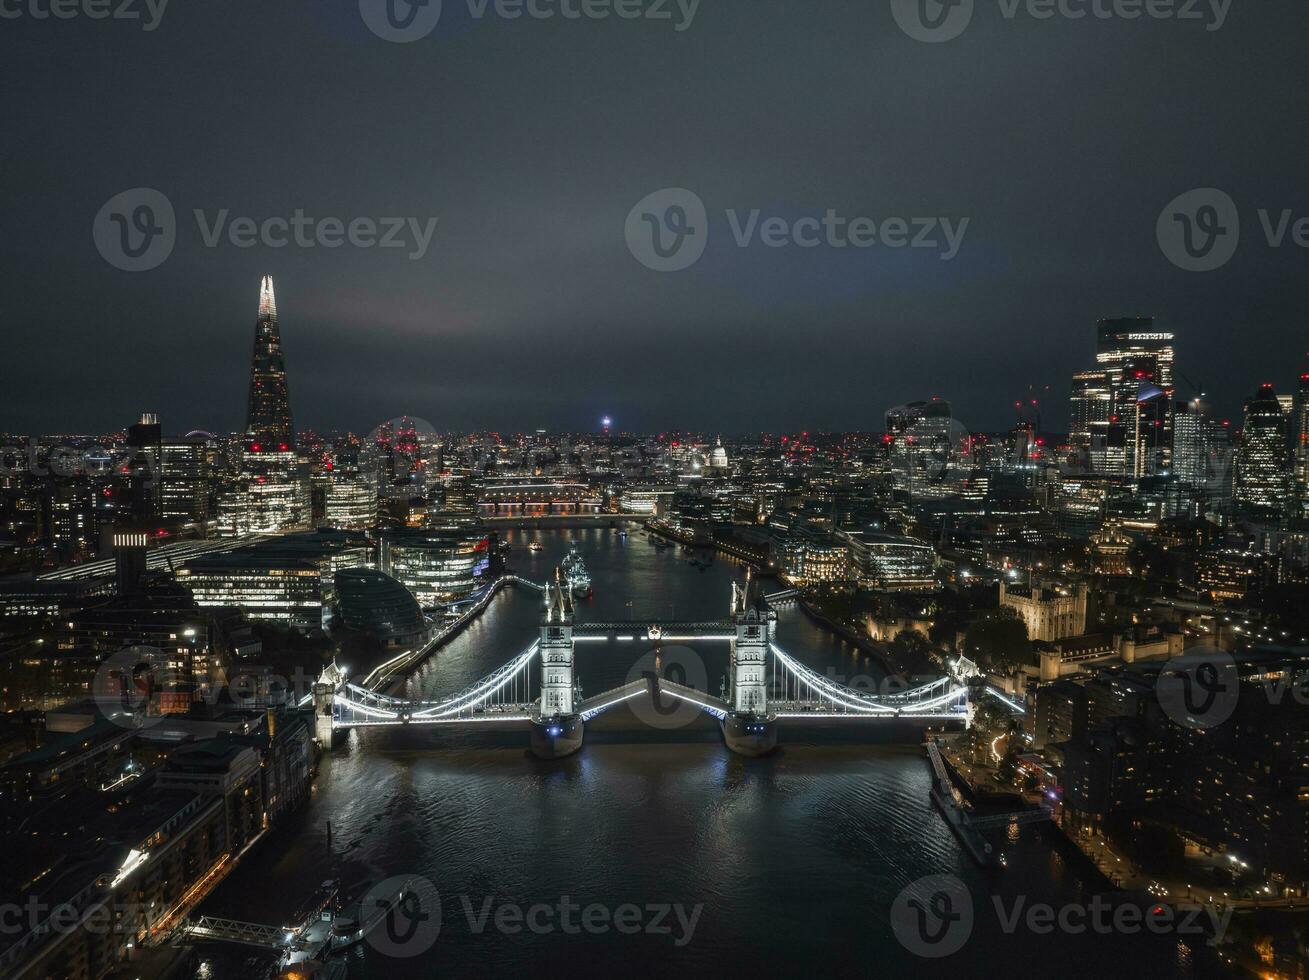 antenn natt se av de lyft upp torn bro i london. foto